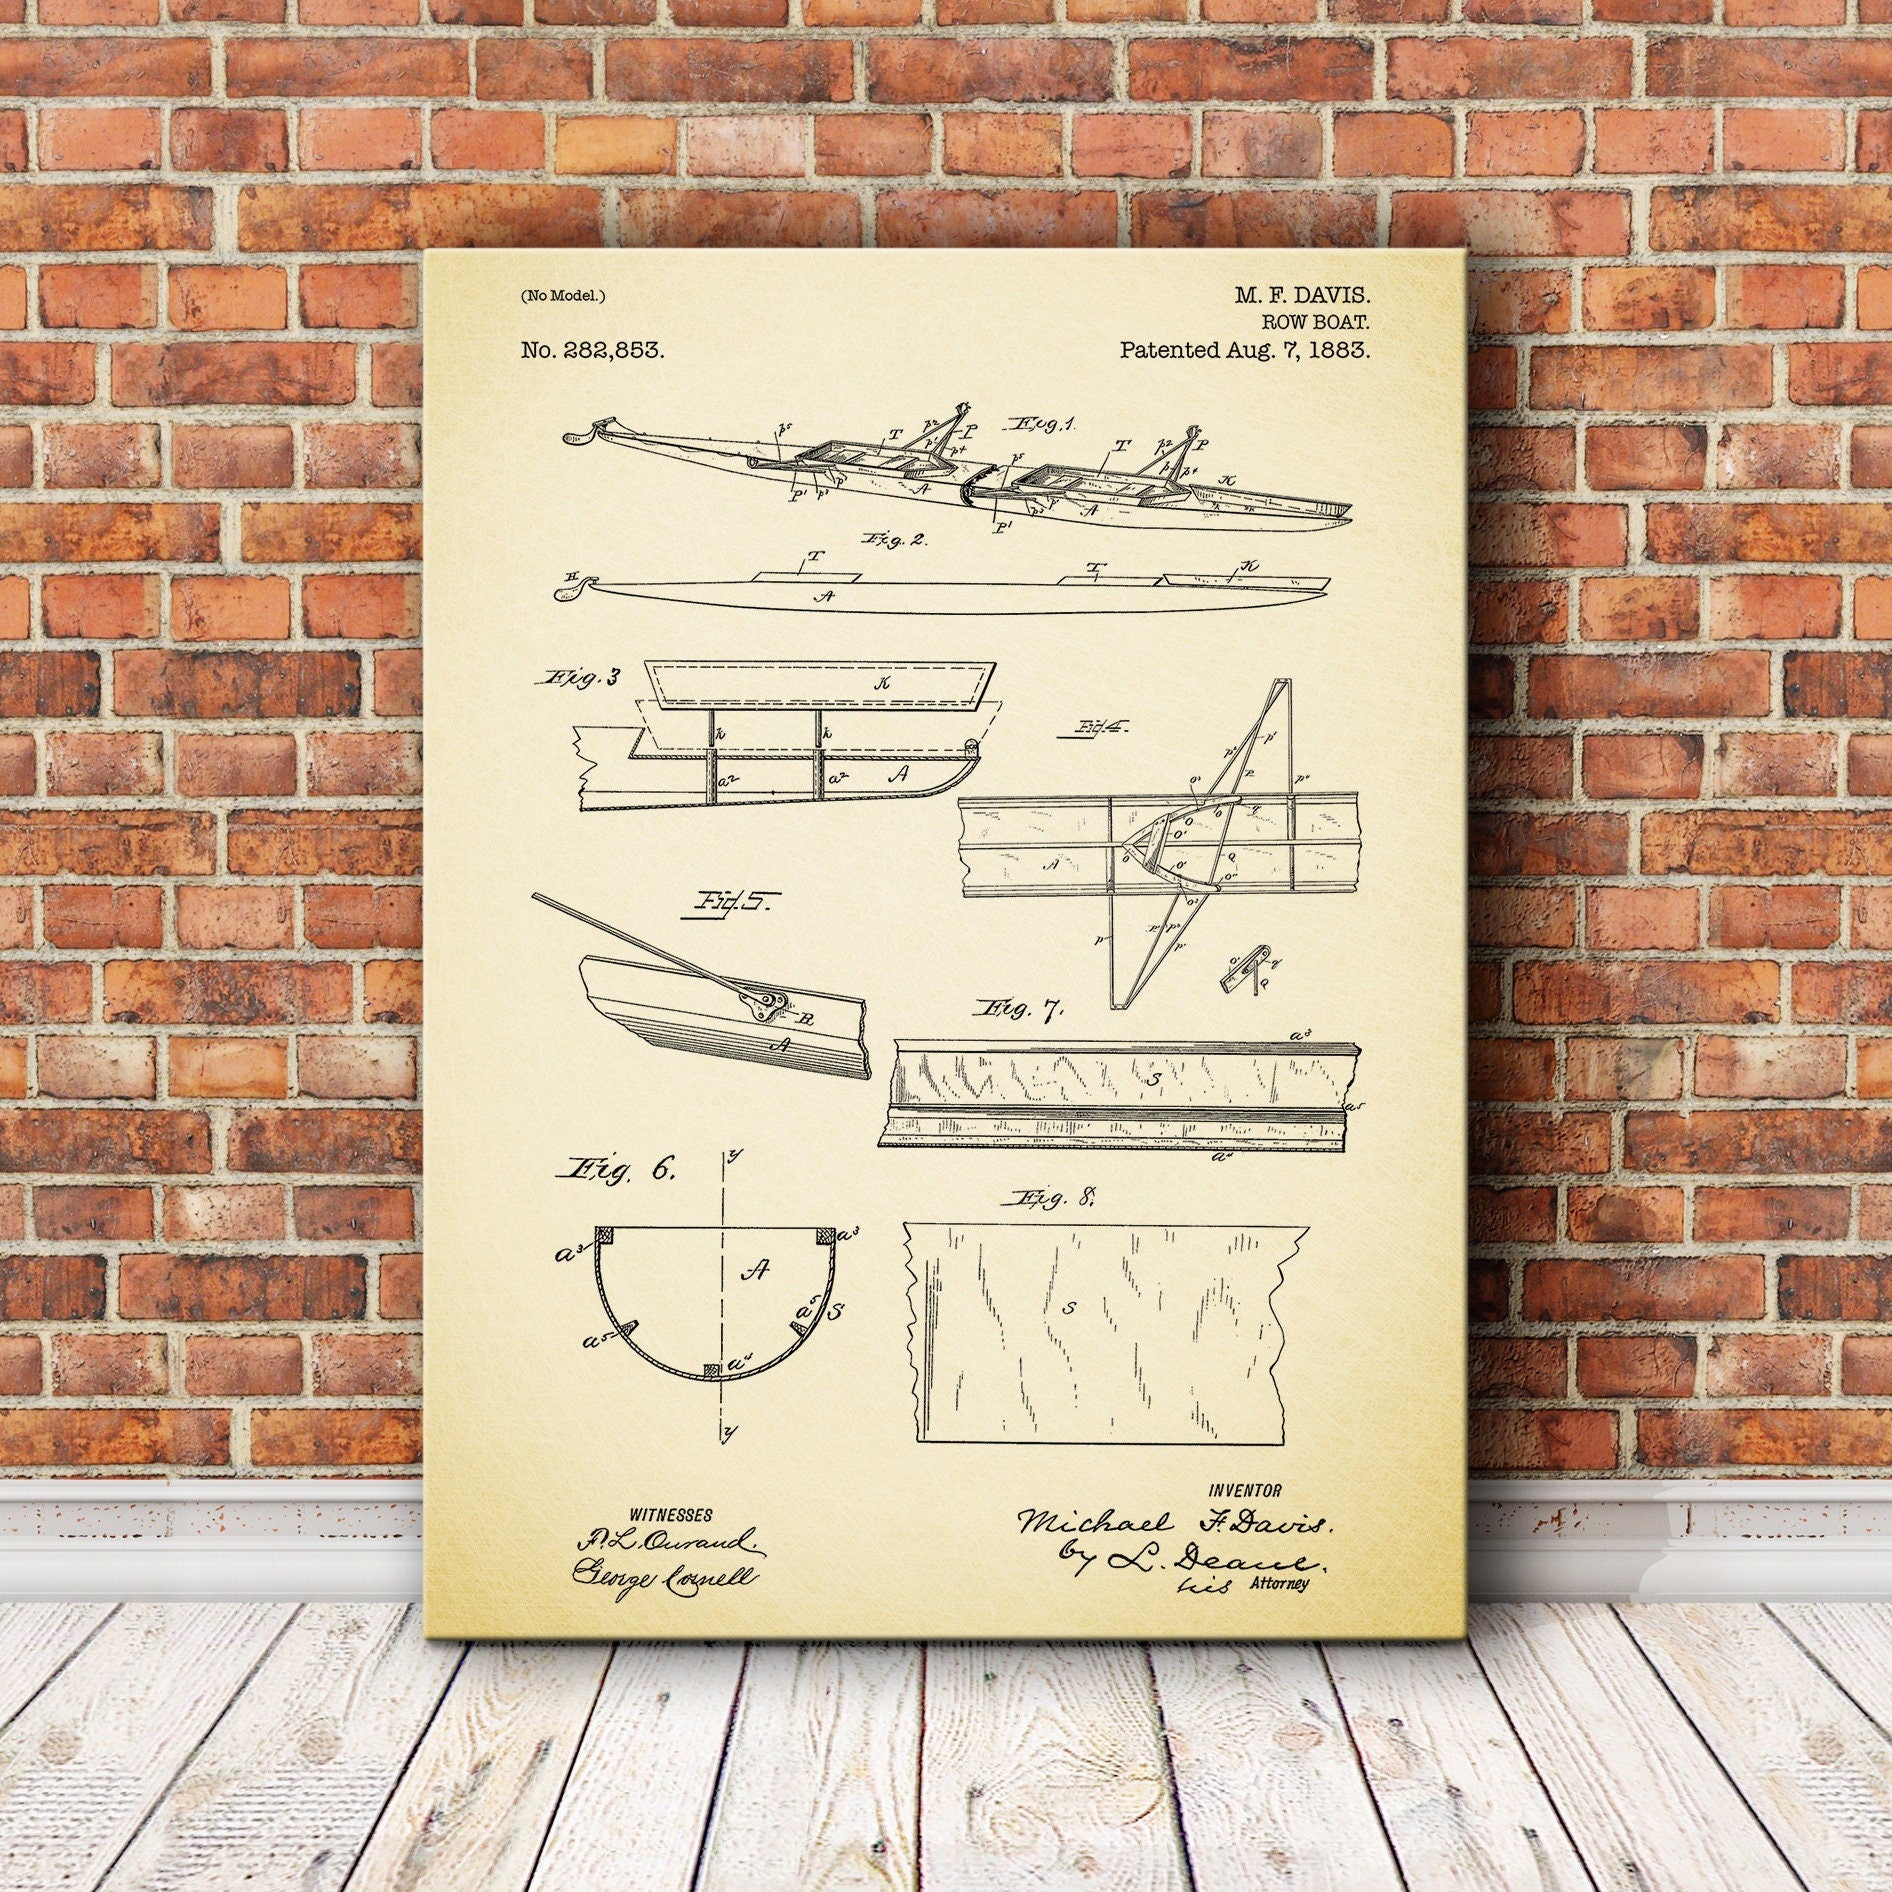 Nautical Patent print, Row Boar for Nautical Patent print, Patent print, Patent print design, Vintage patent print, Nautical Art